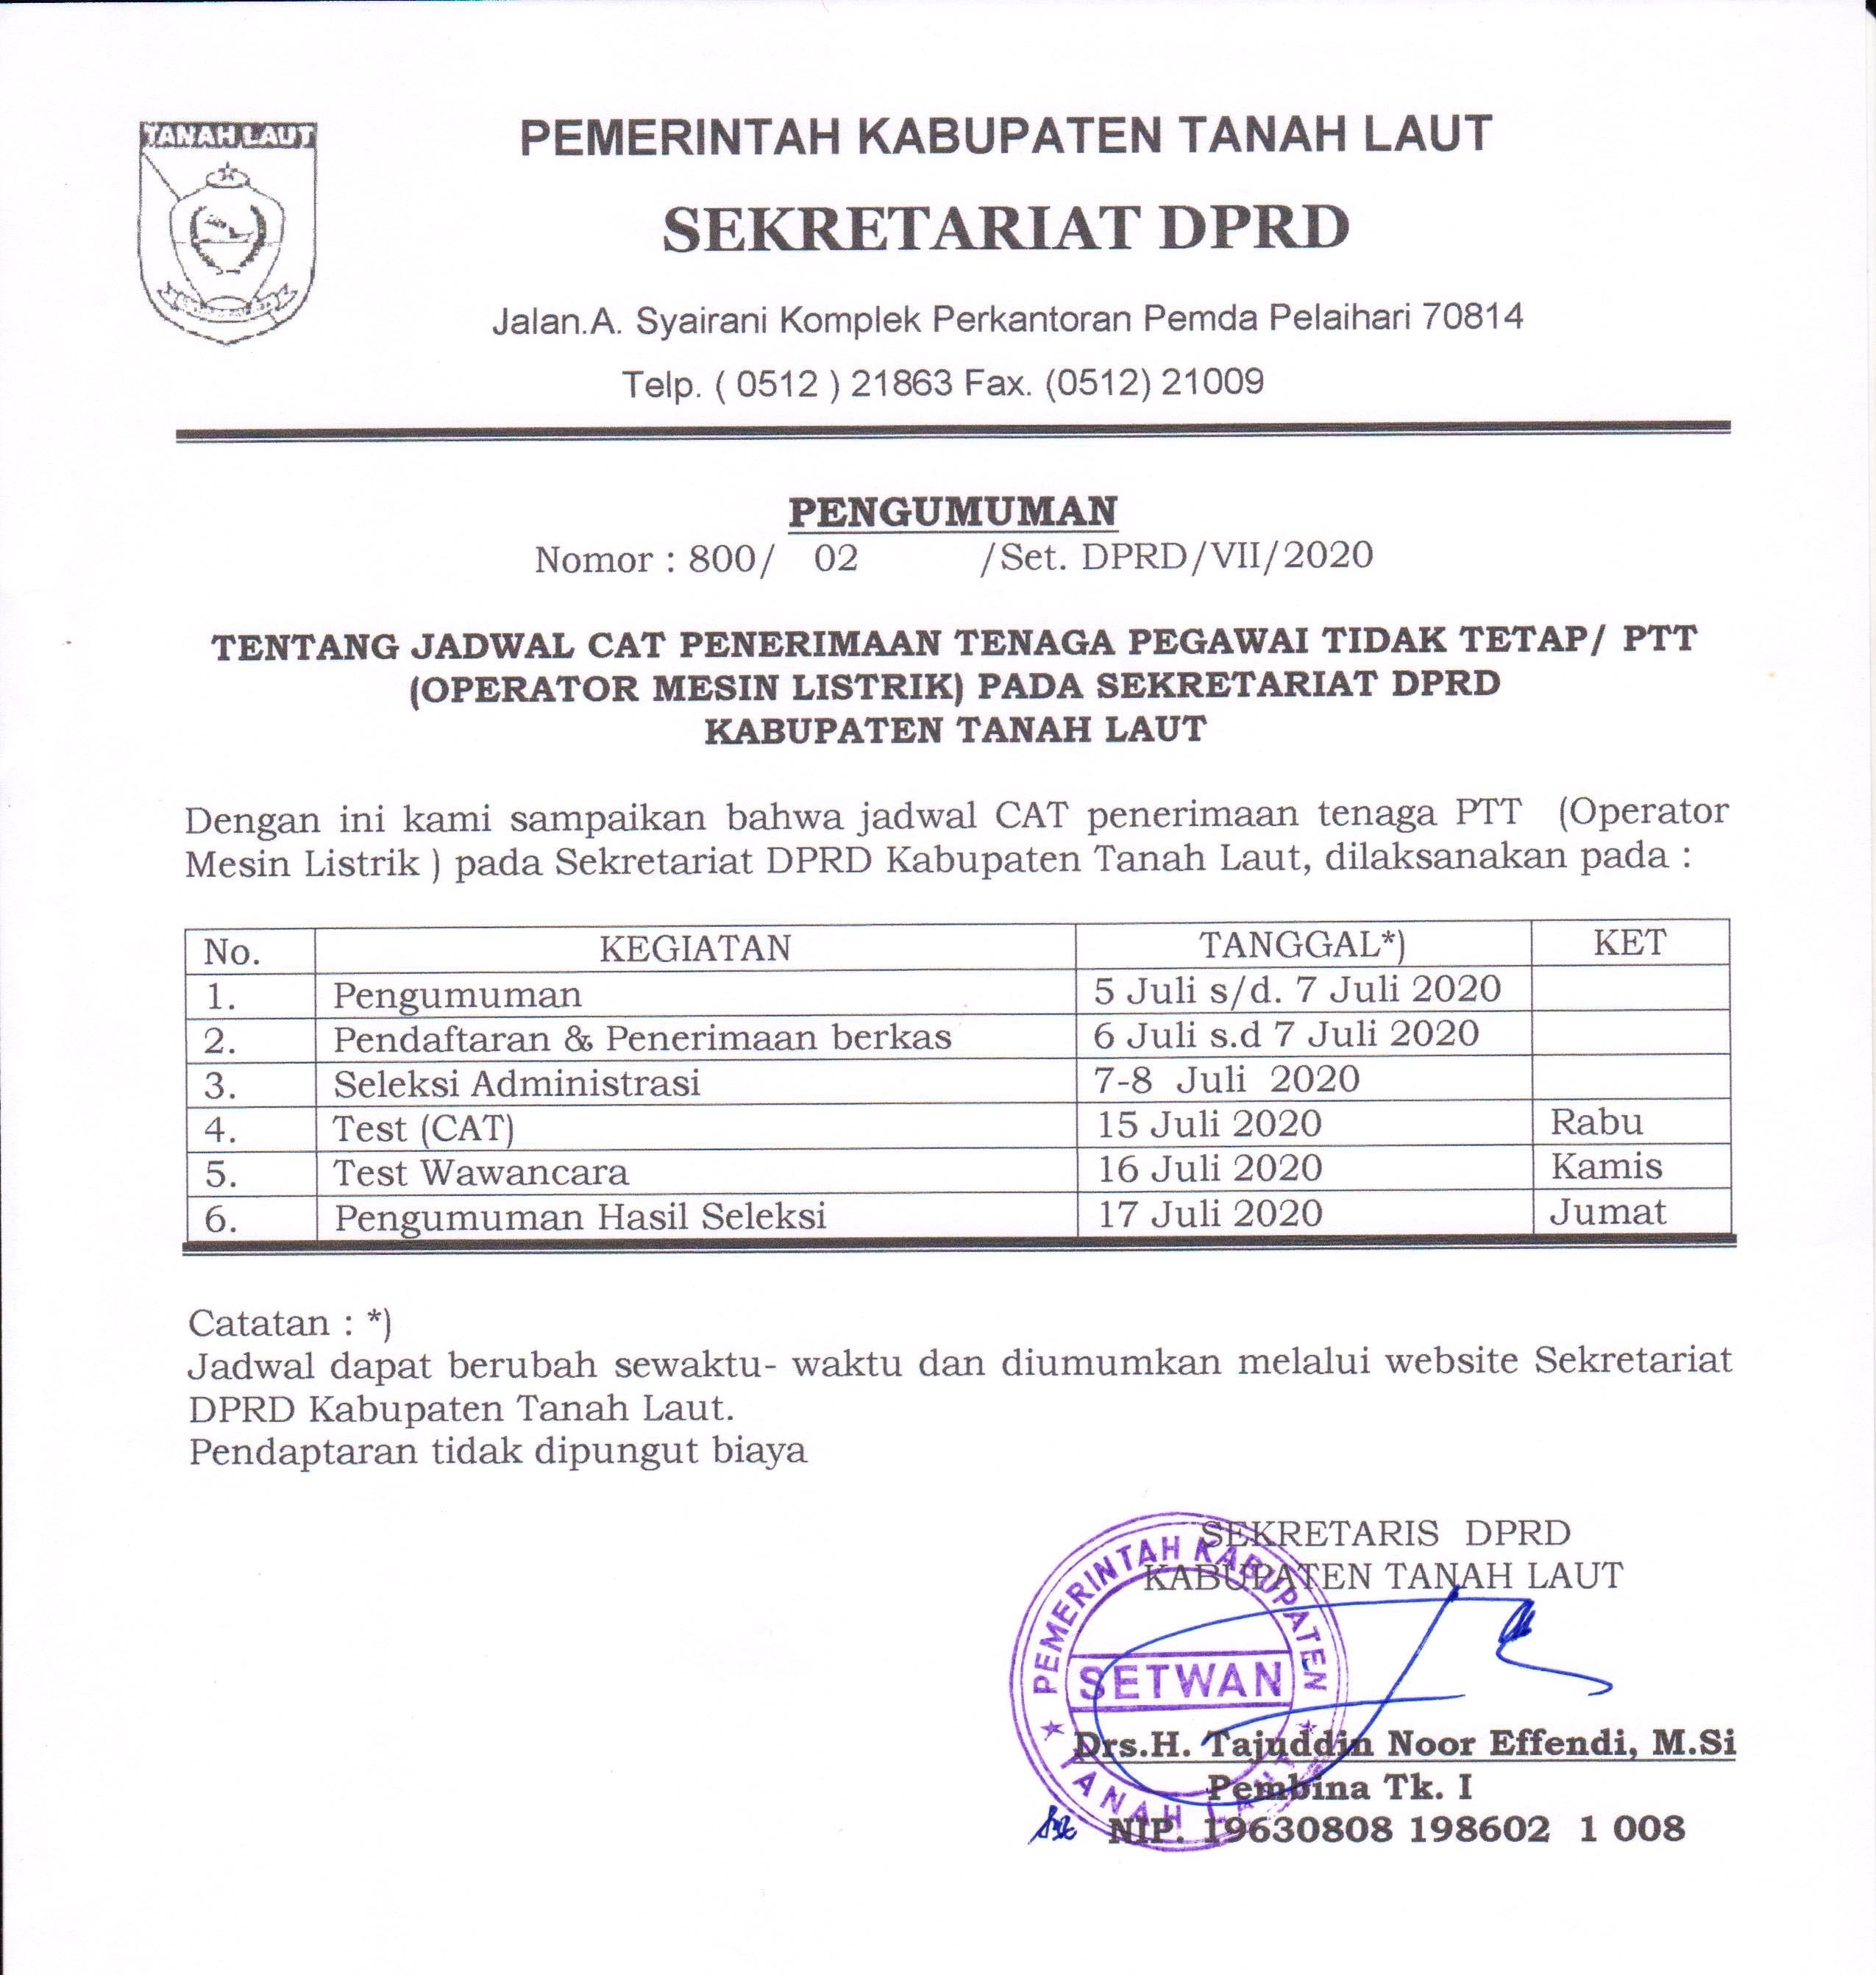 Pengumuman Jadwal CAT Tenaga Pegawai Tidak Tetap/ PTT (Operator Mesin Listrik) Pada Sekretariat DPRD